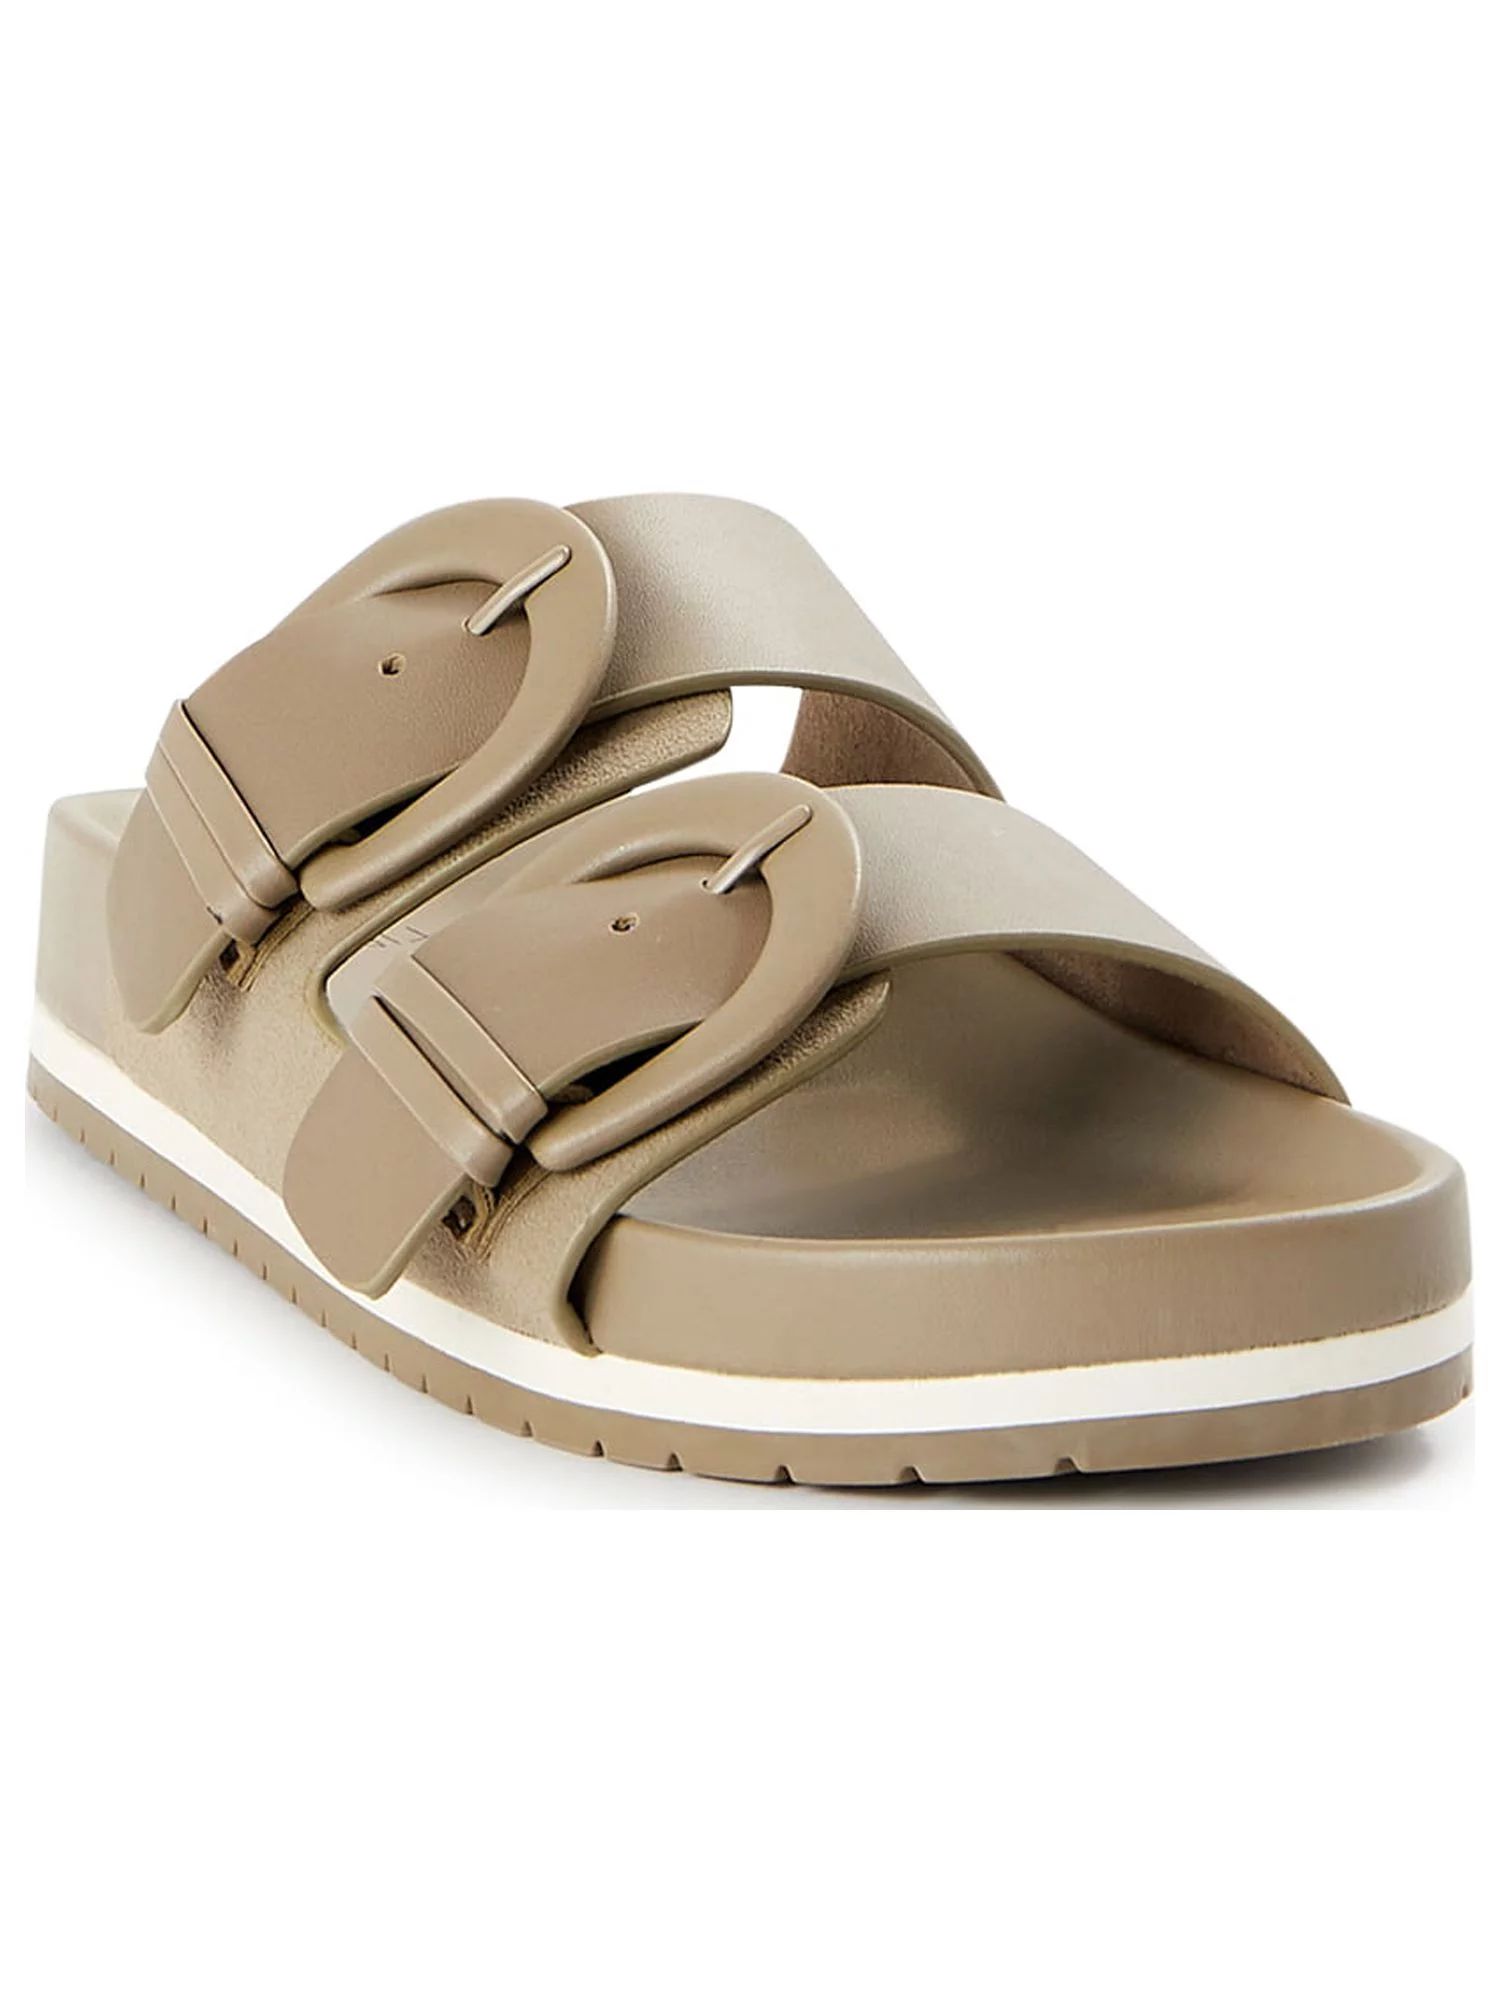 Time and Tru Women's Dressy Footbed Slide Sandals | Walmart (US)